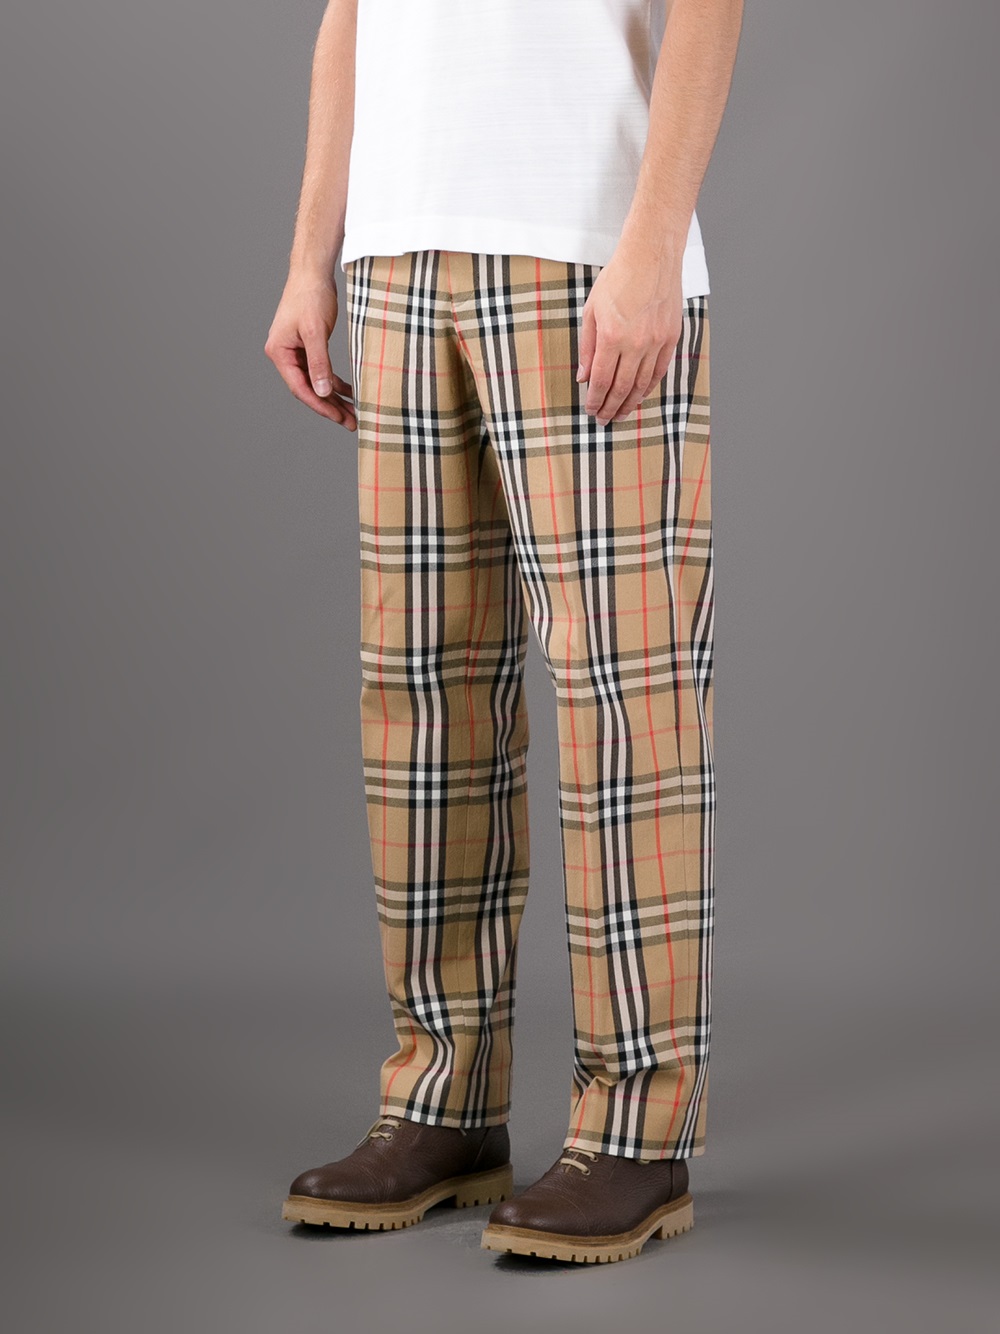 burberry pants mens 2013